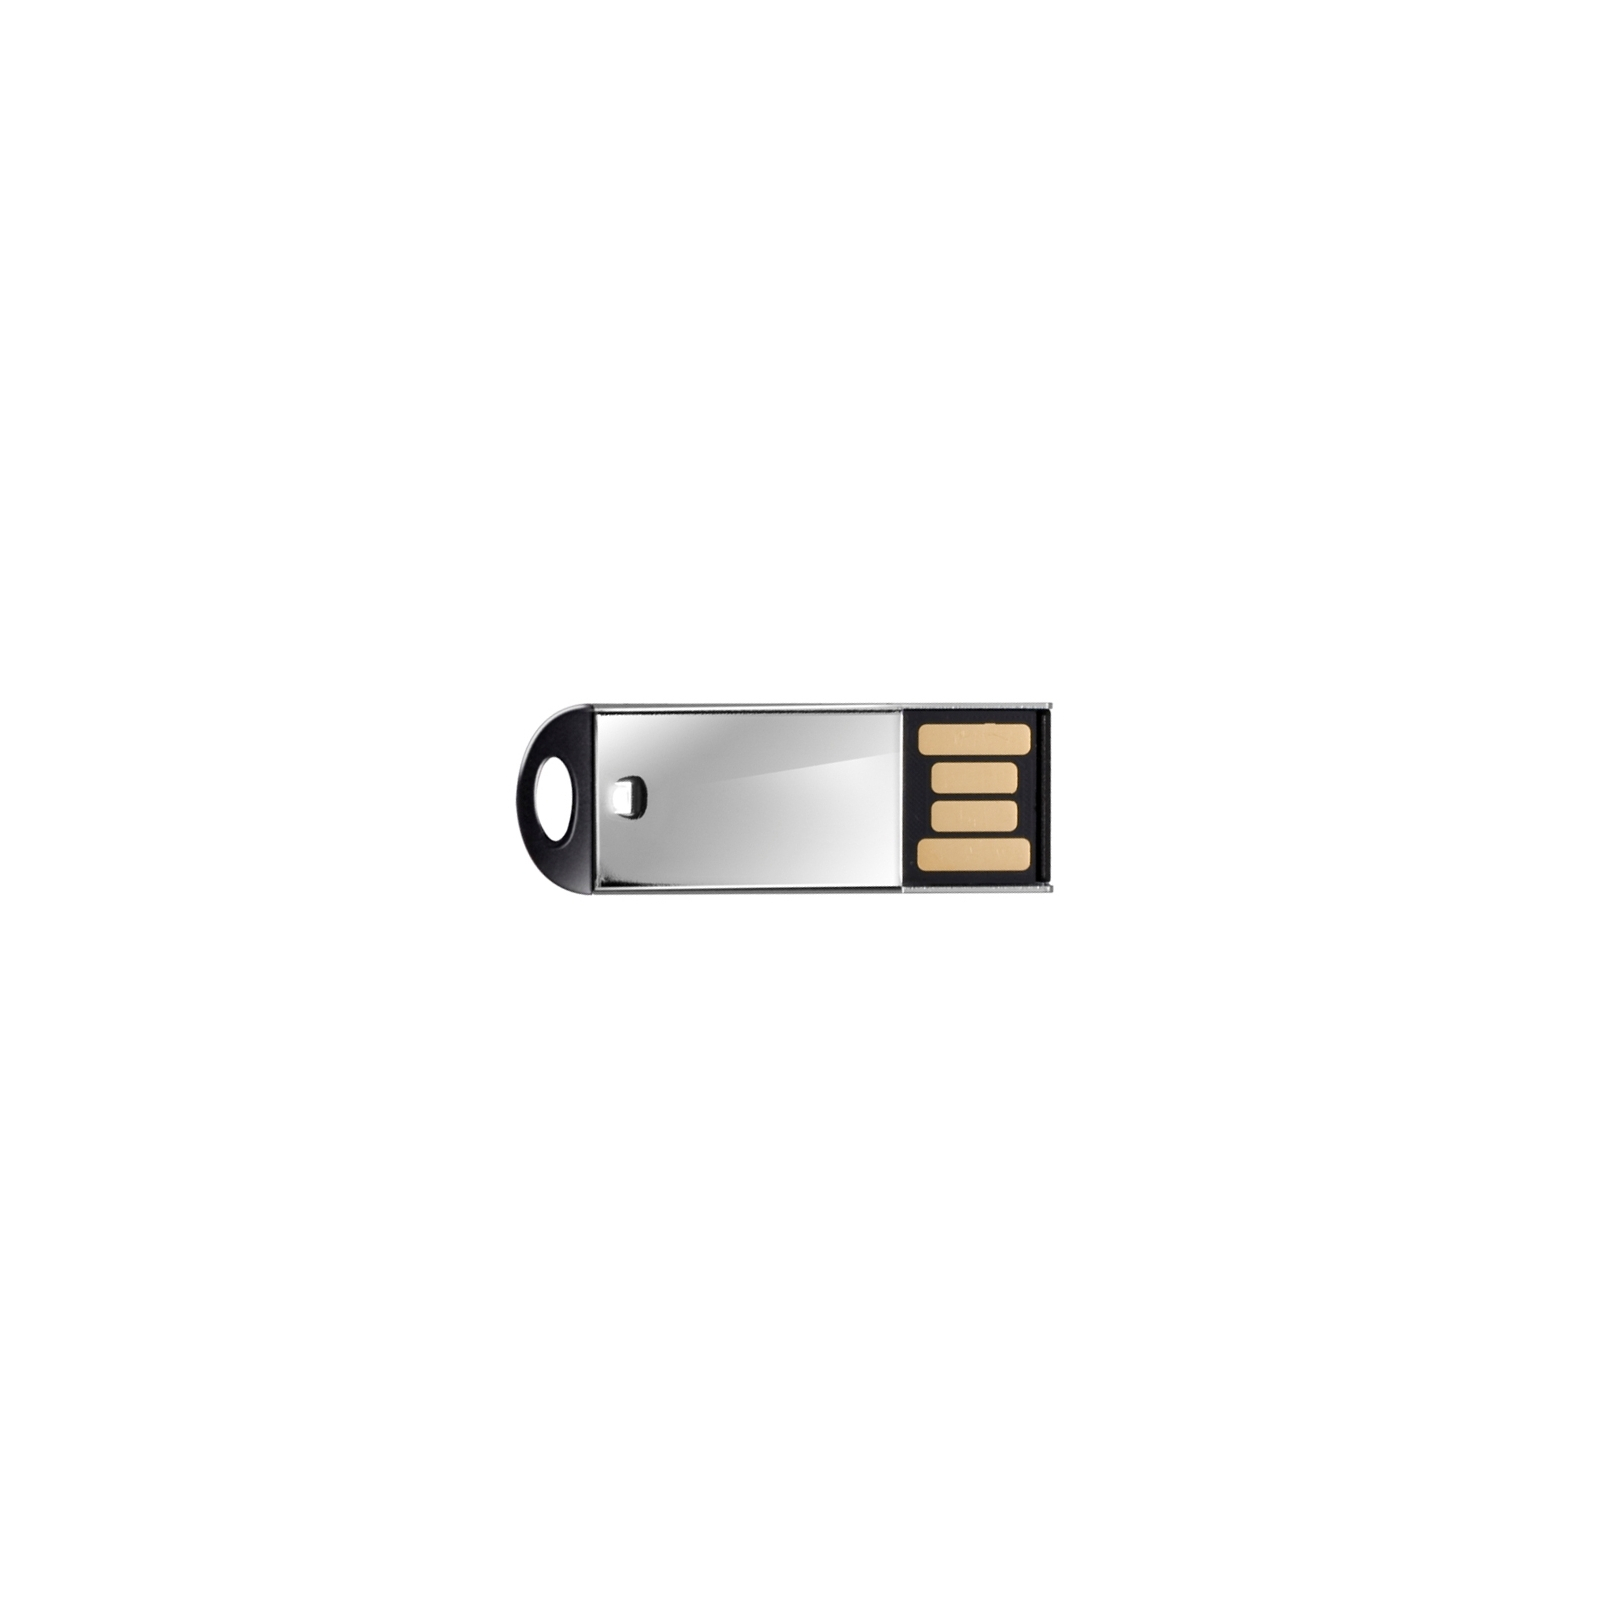 USB флеш накопитель Silicon Power 16GB Touch 830 USB 2.0 (SP016GBUF2830V1S) изображение 2